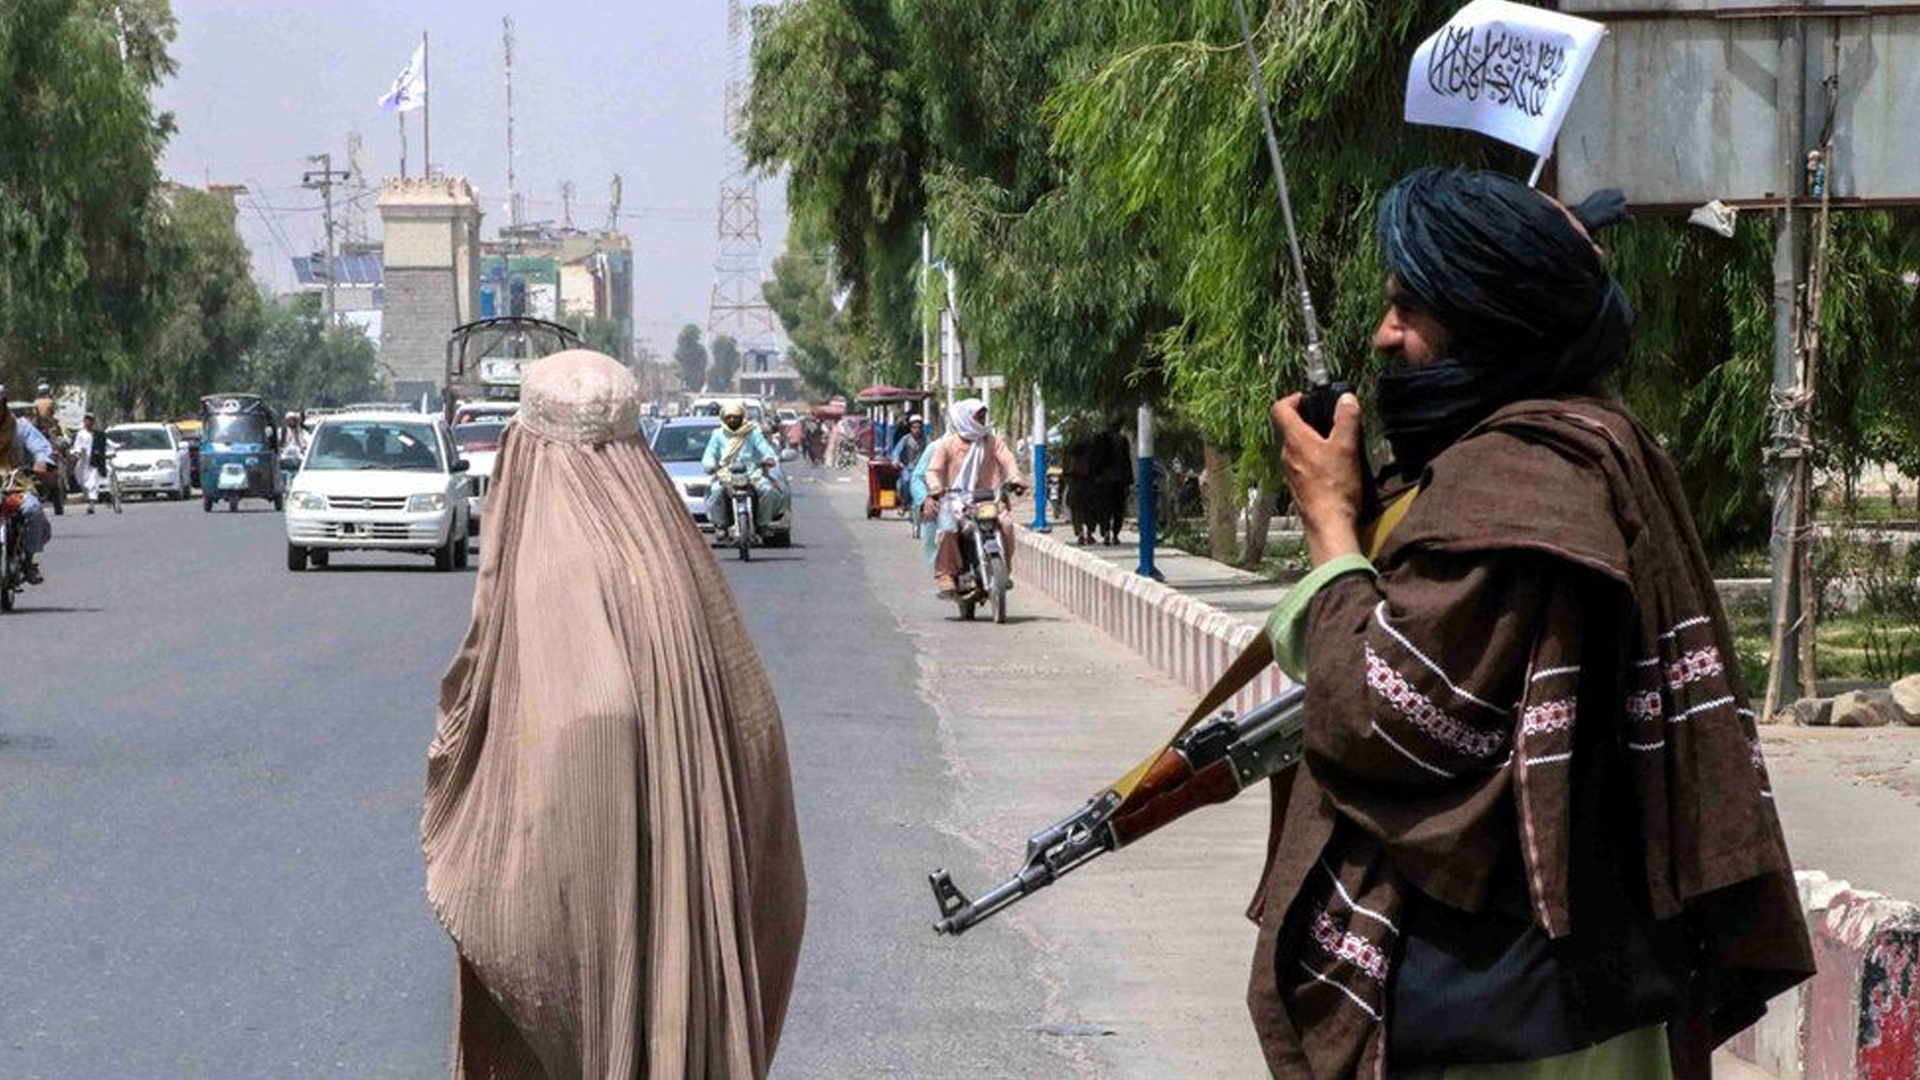  700 Killed, 1406 Injured Since Taliban Takeover: UNAMA Report